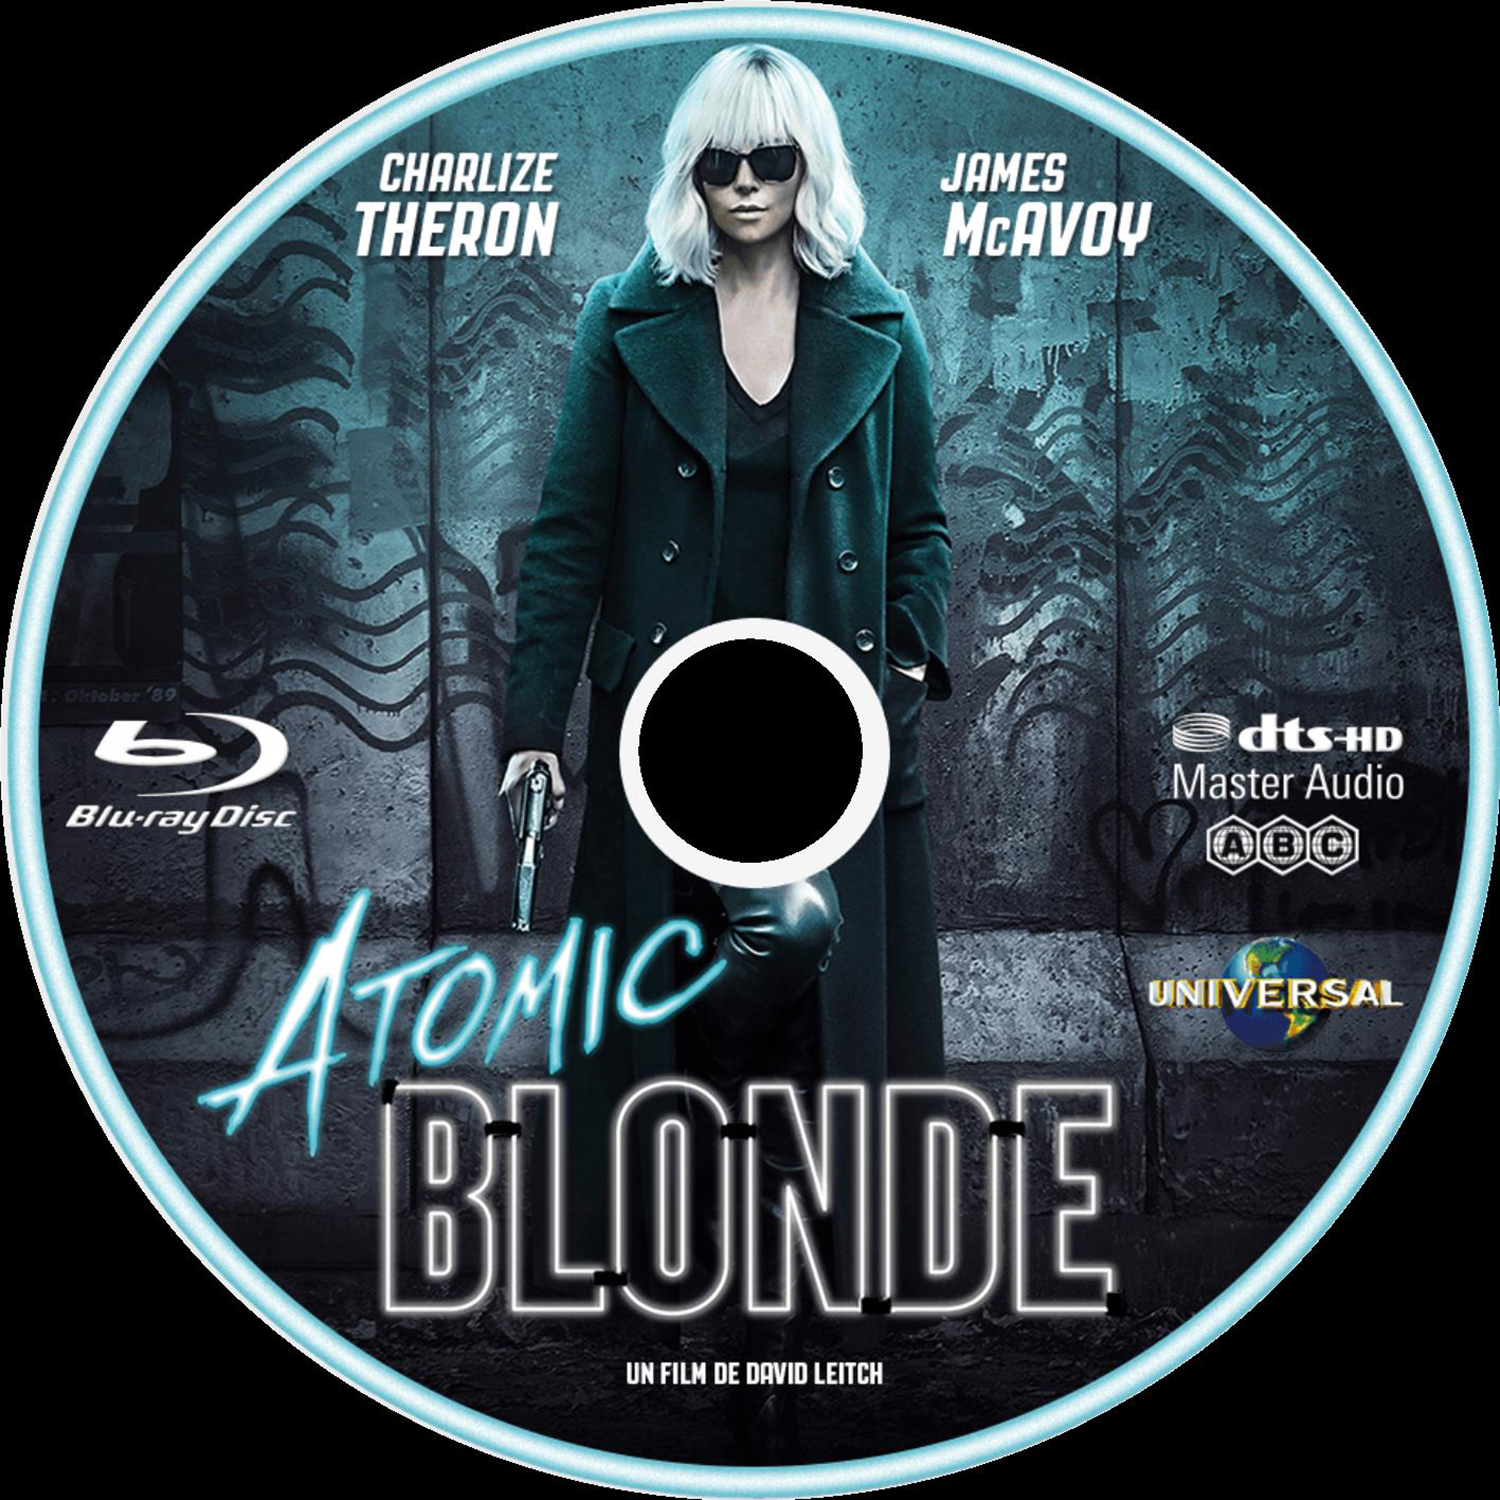 Atomic blonde custom (BLU-RAY)